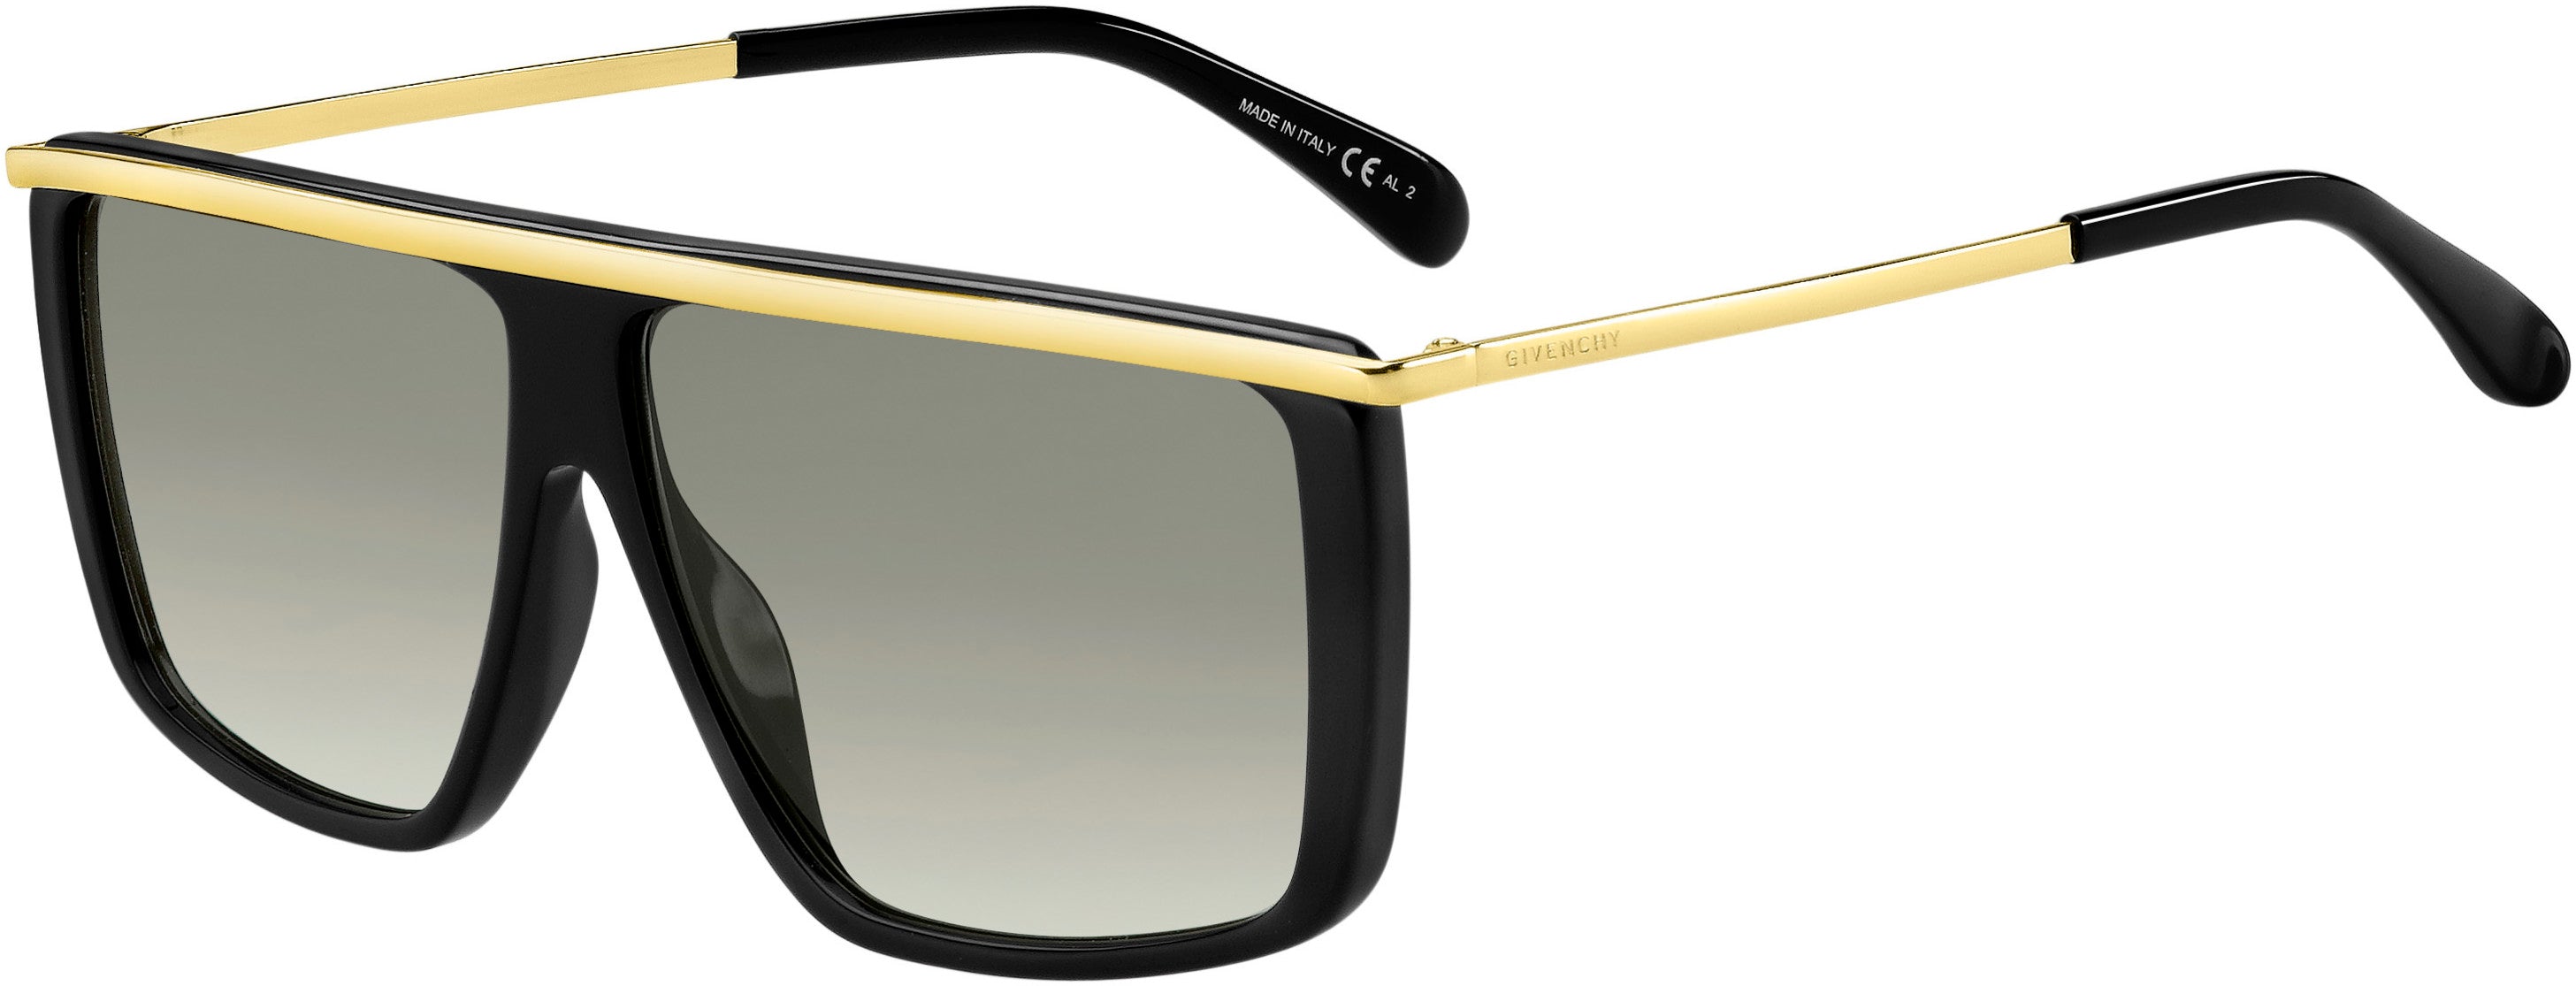  Givenchy 7146/G/S Browline Sunglasses 02M2-02M2  Black Gold (9O Dark Gray Gradient)